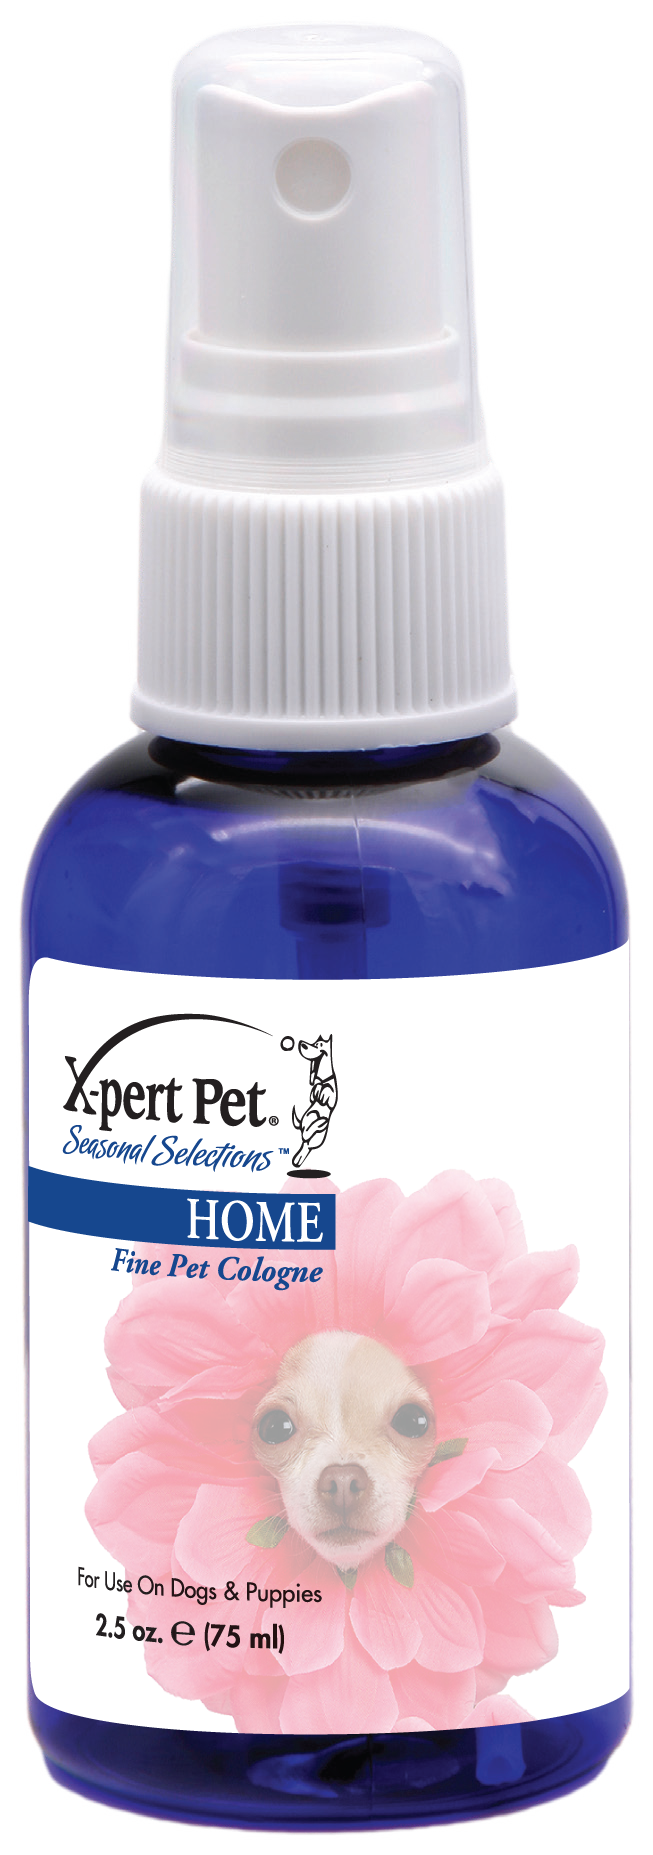 Home Pet Cologne | X-Pert Pet®